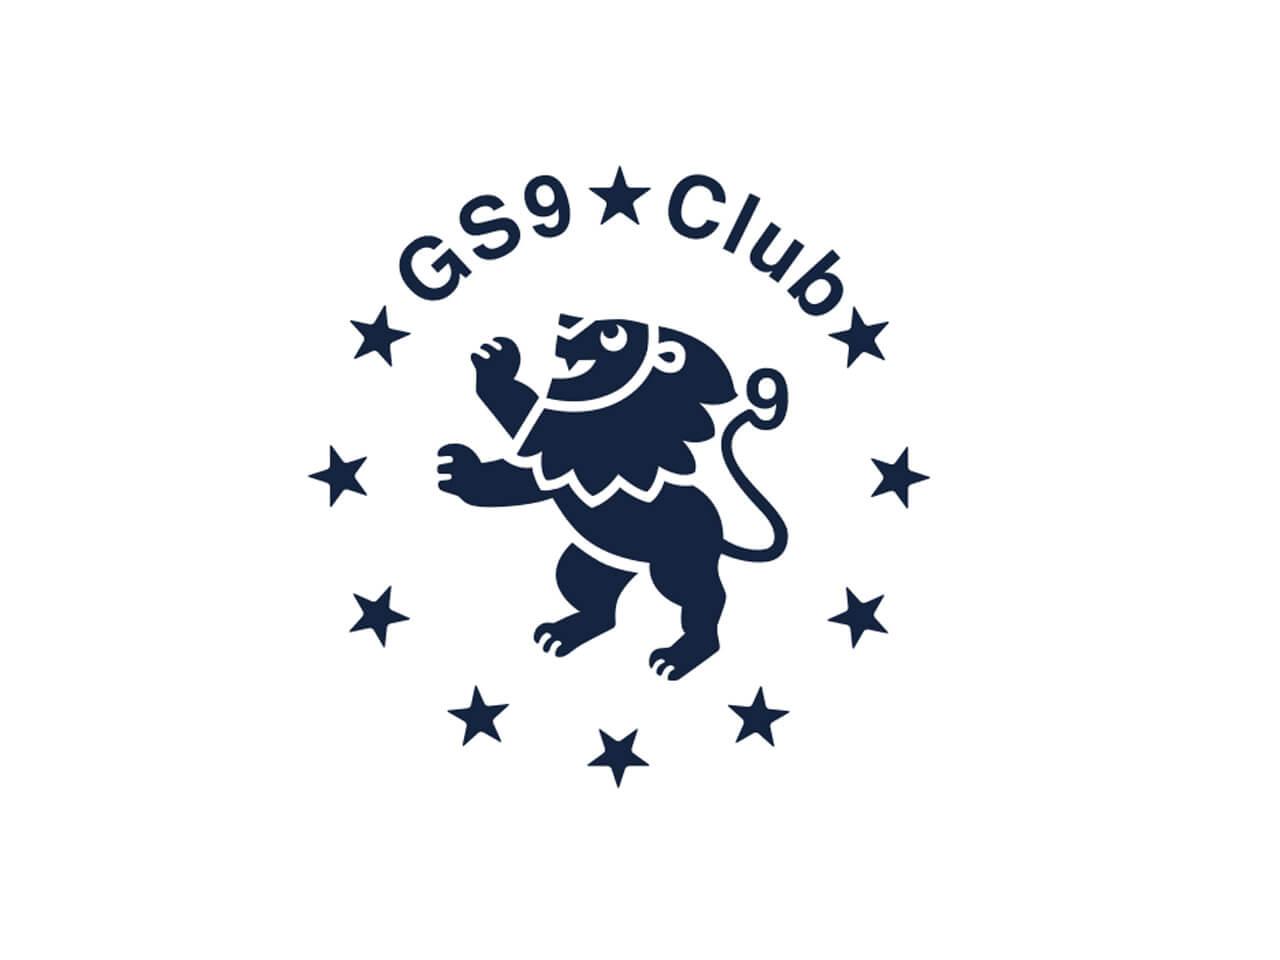 「GS9 Club」のロゴ